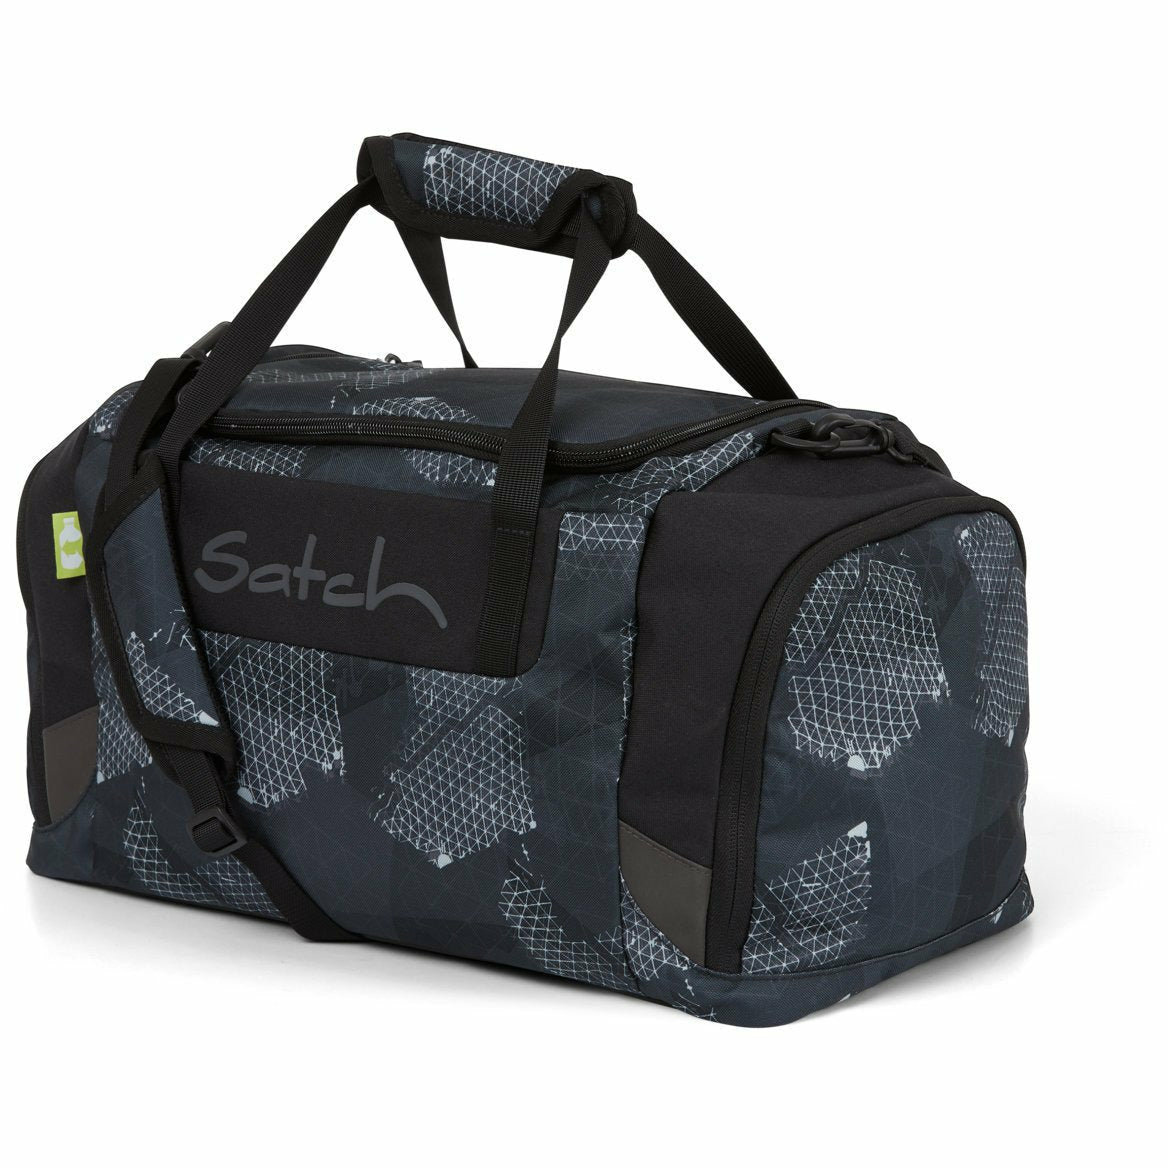 satch | satch Duffle Bag | Infra Grey